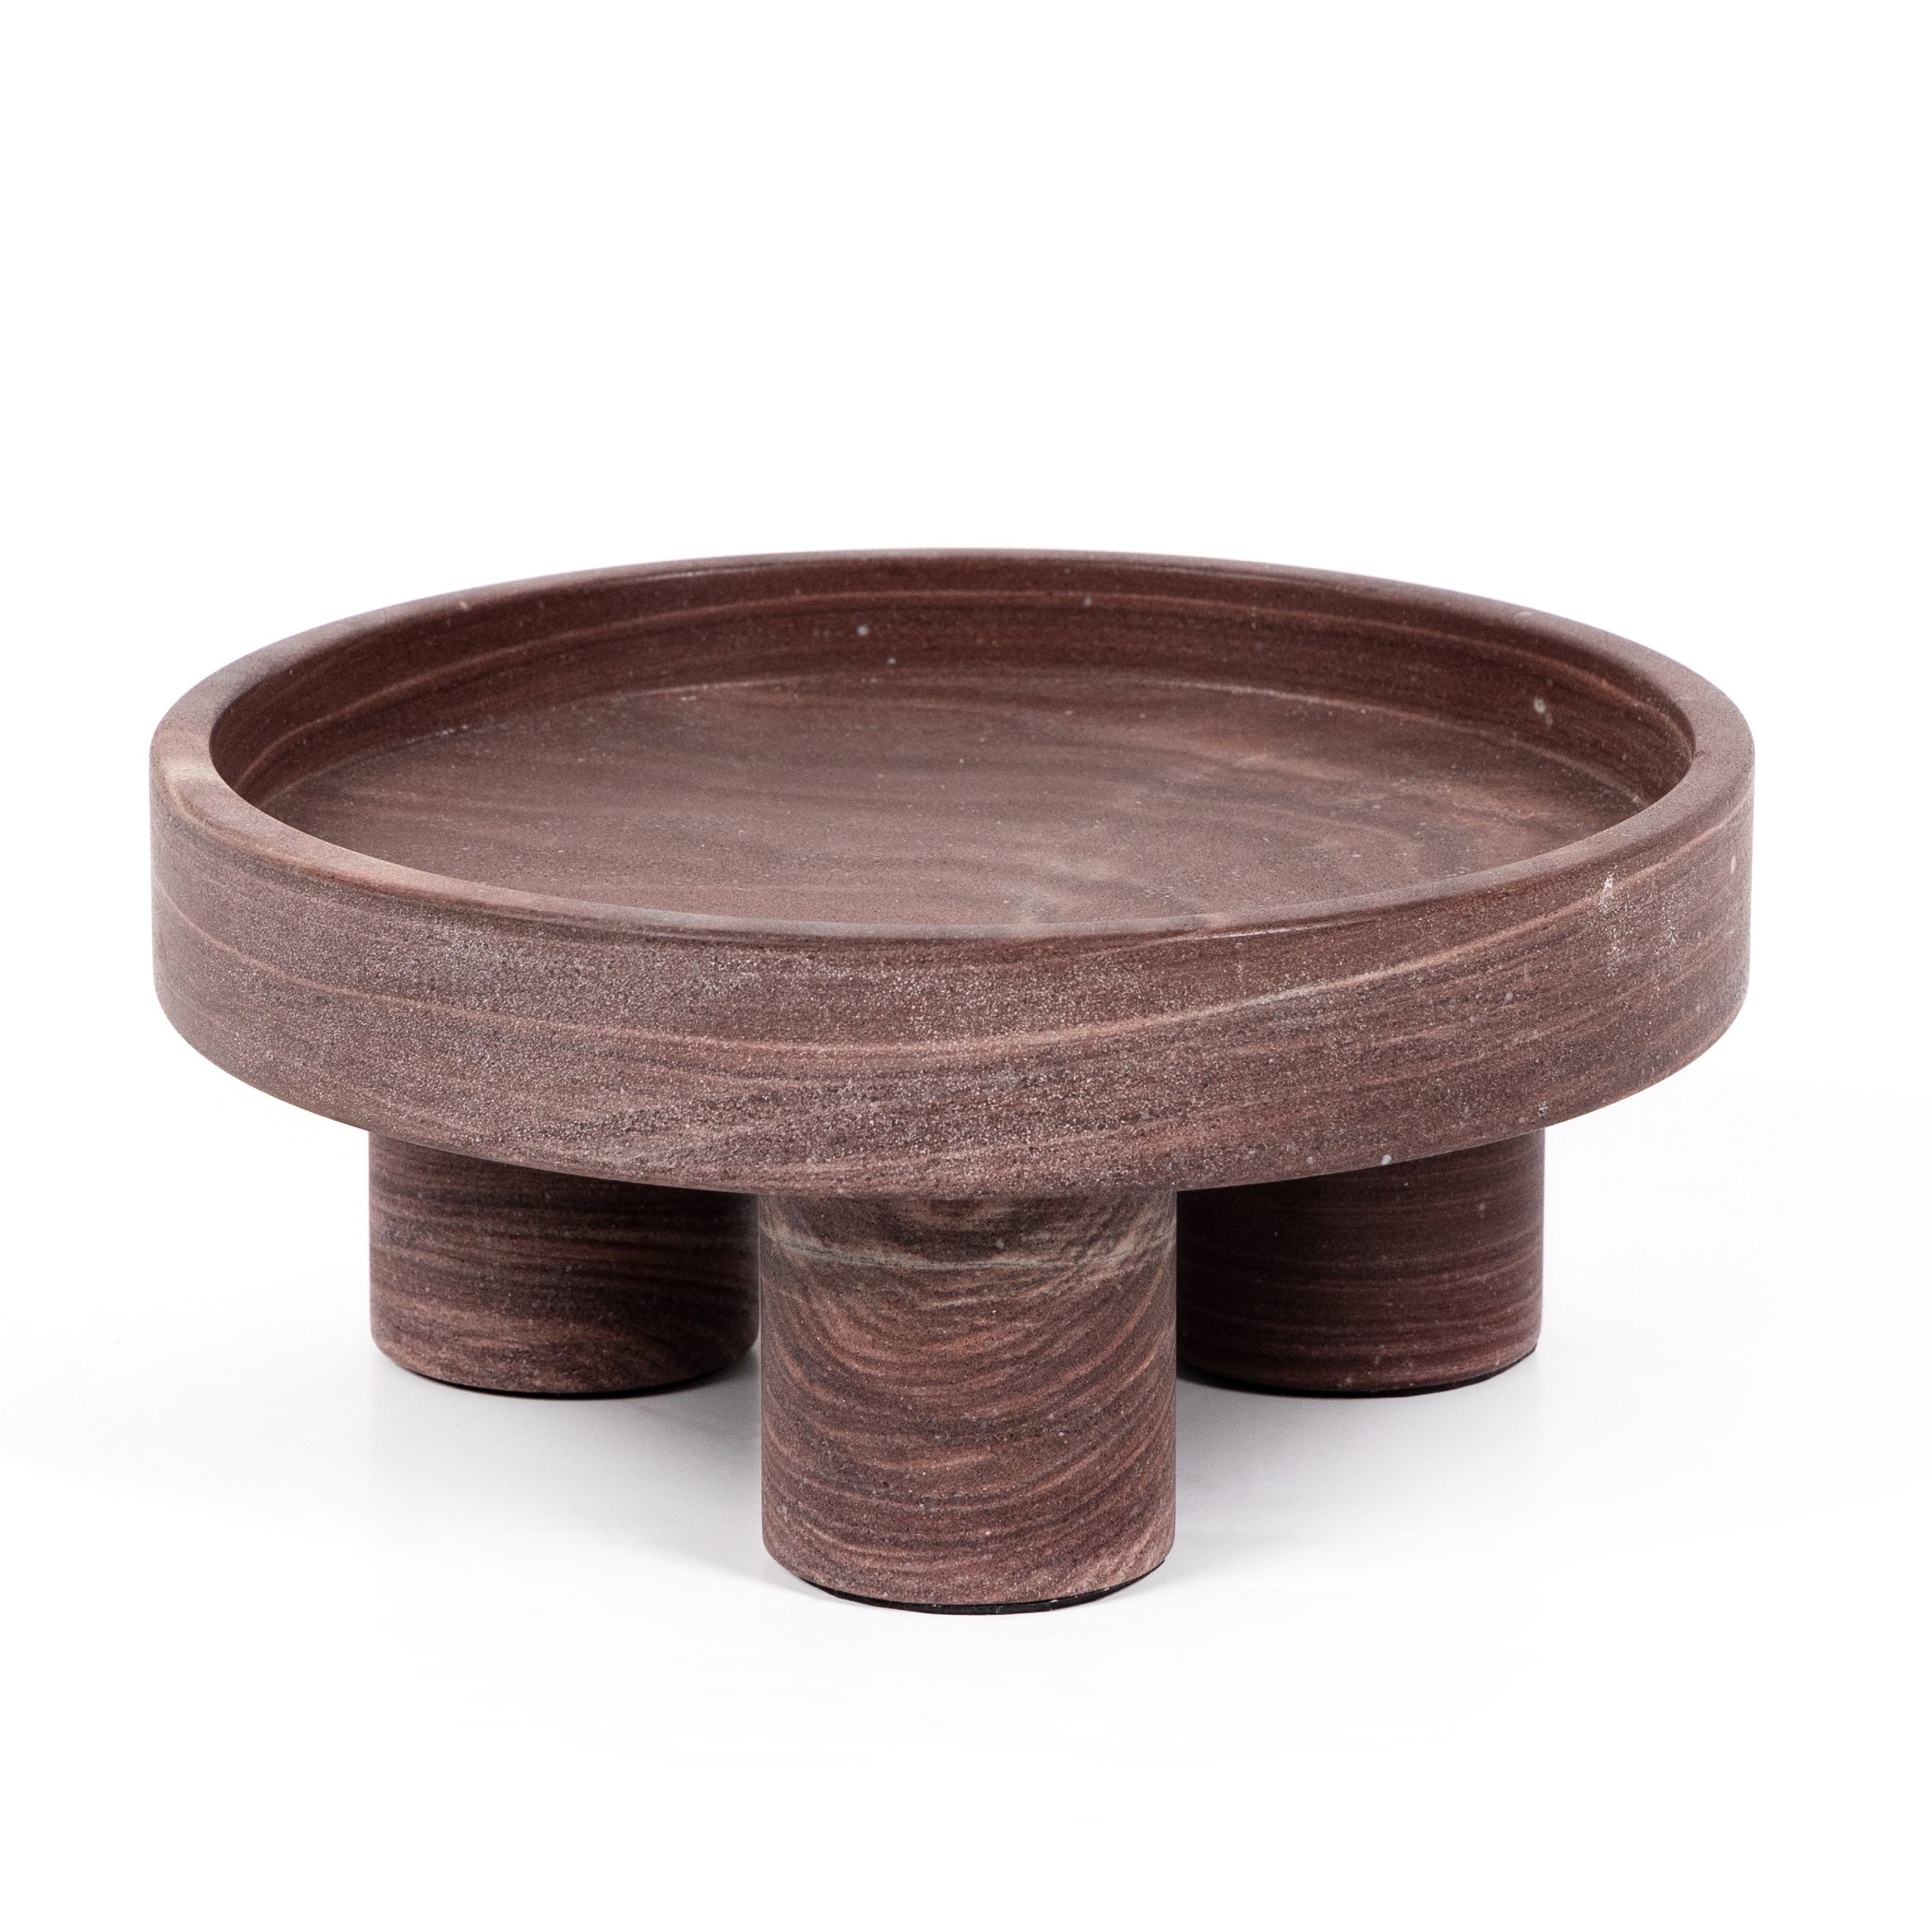 Kanto Bowls, Set Of 2-Tumbled Rust - Image 1